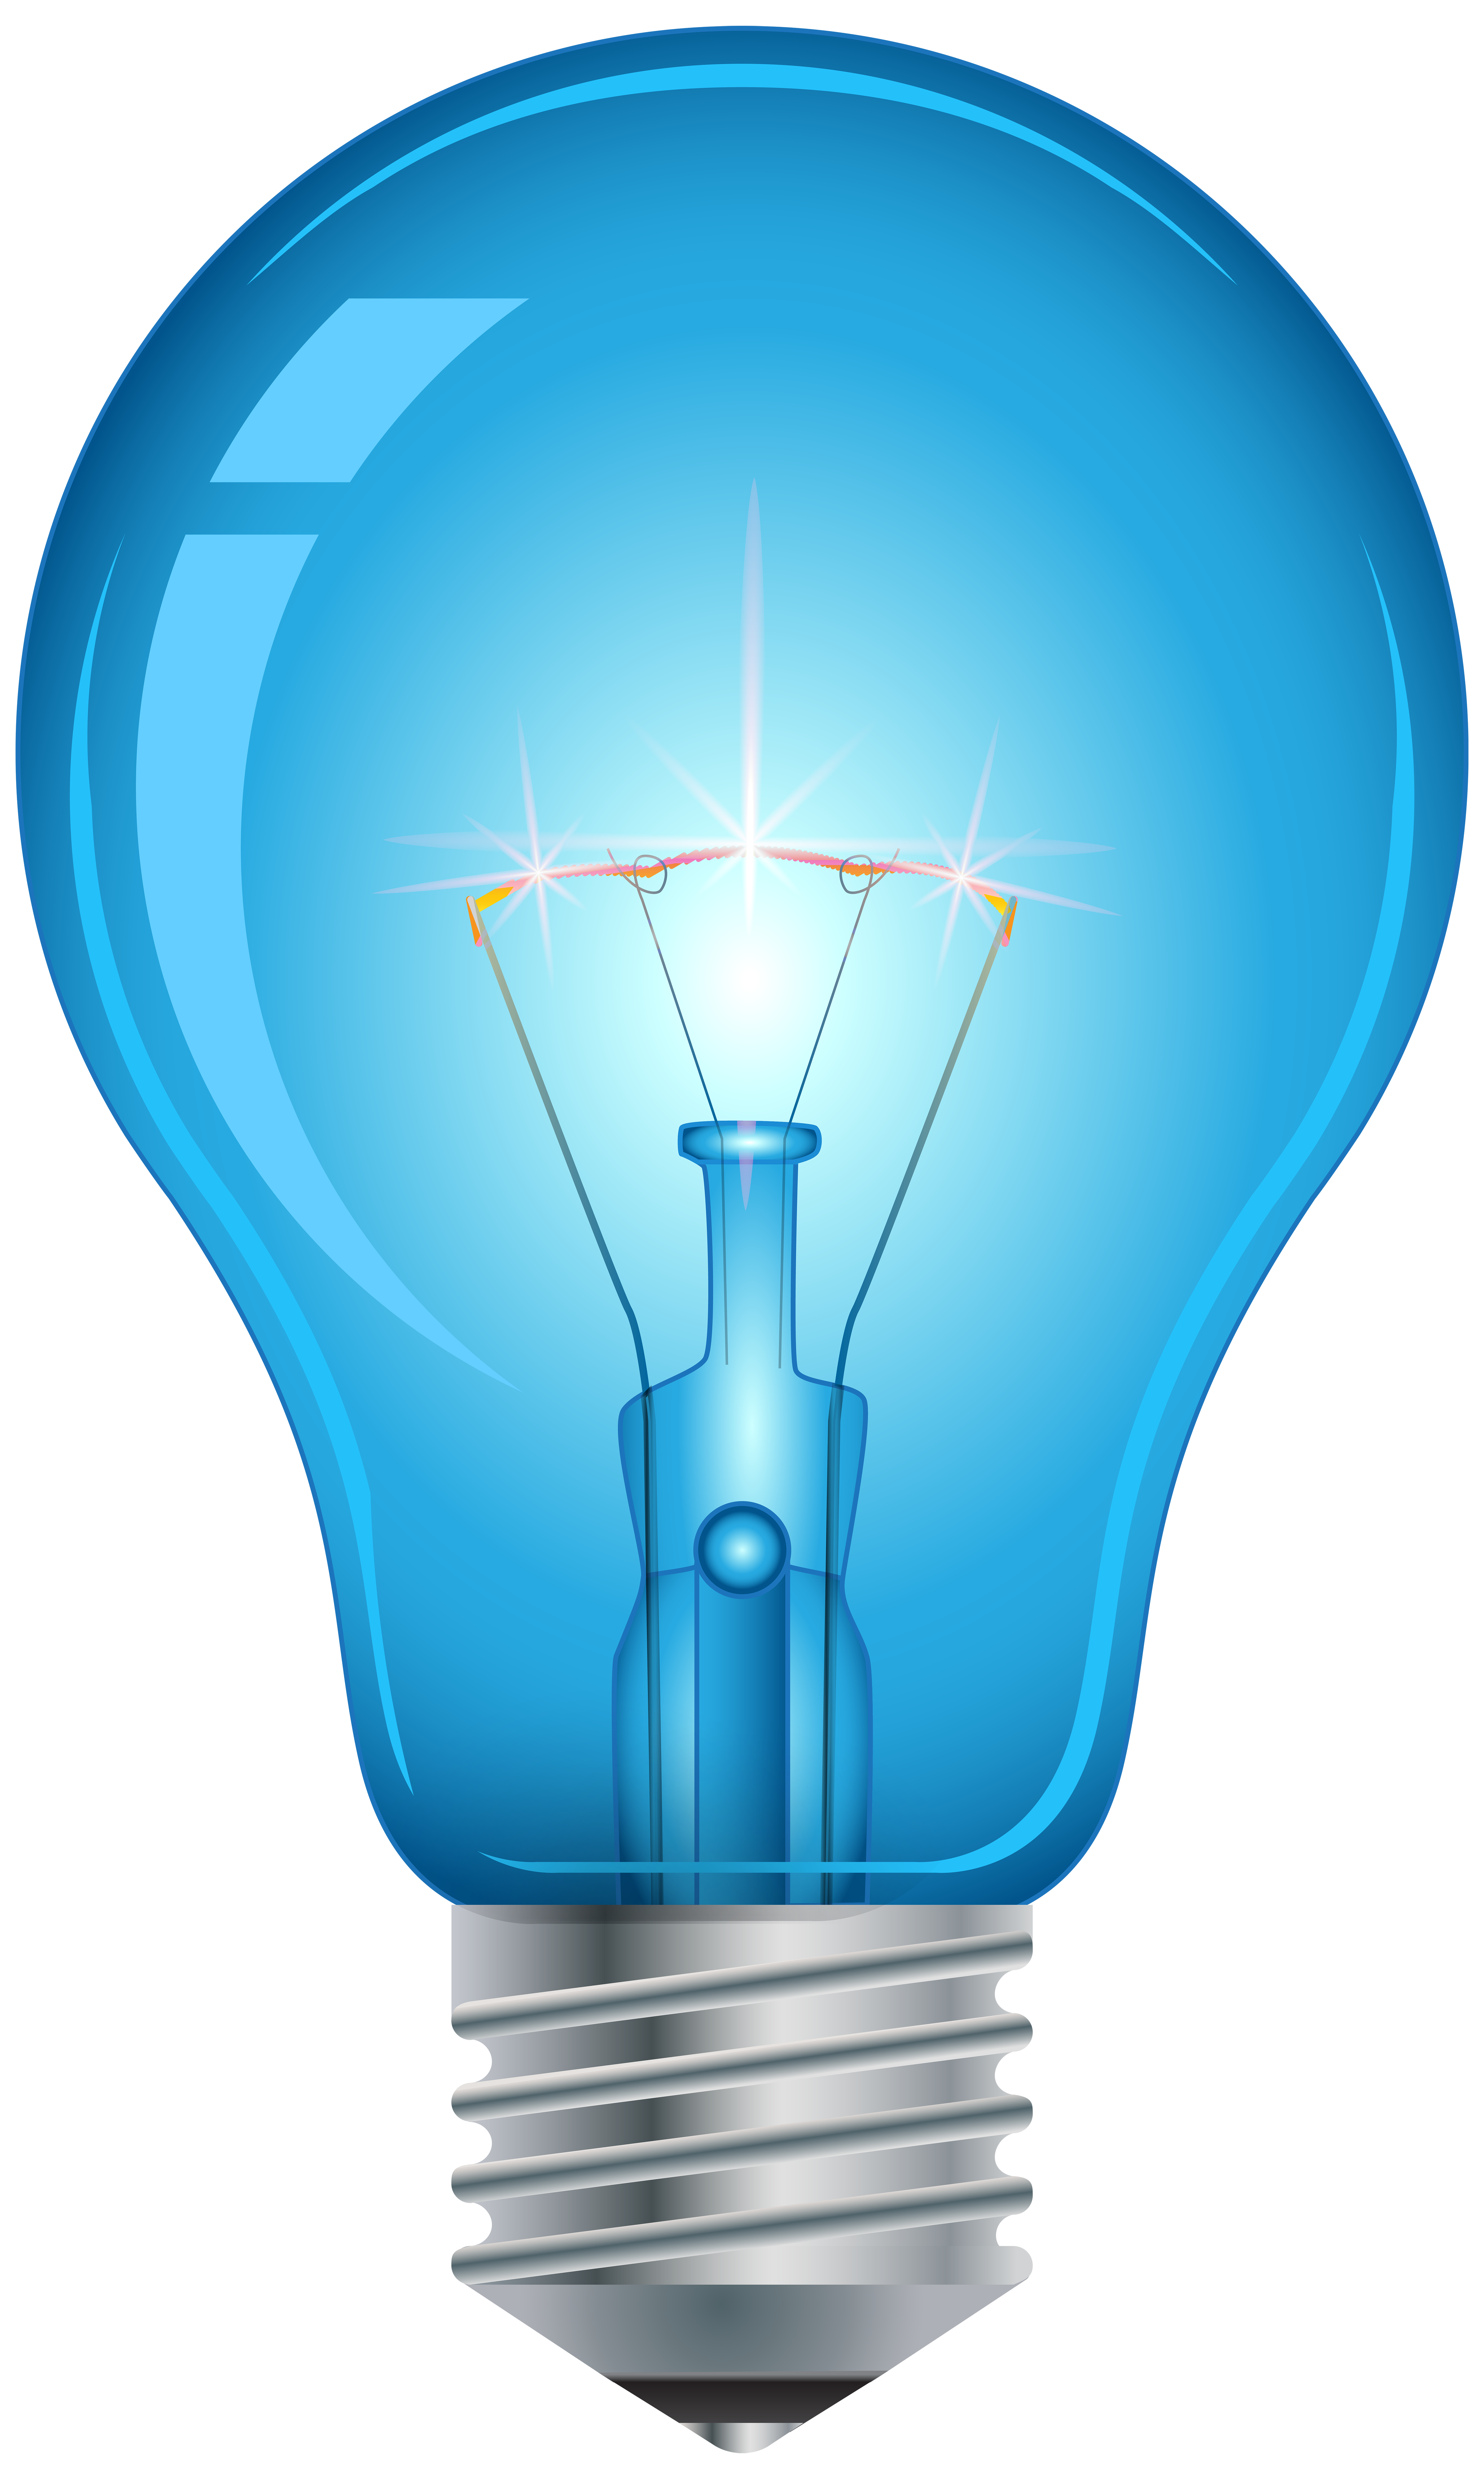 Blue Light Bulb PNG Clip Art - Best WEB Clipart